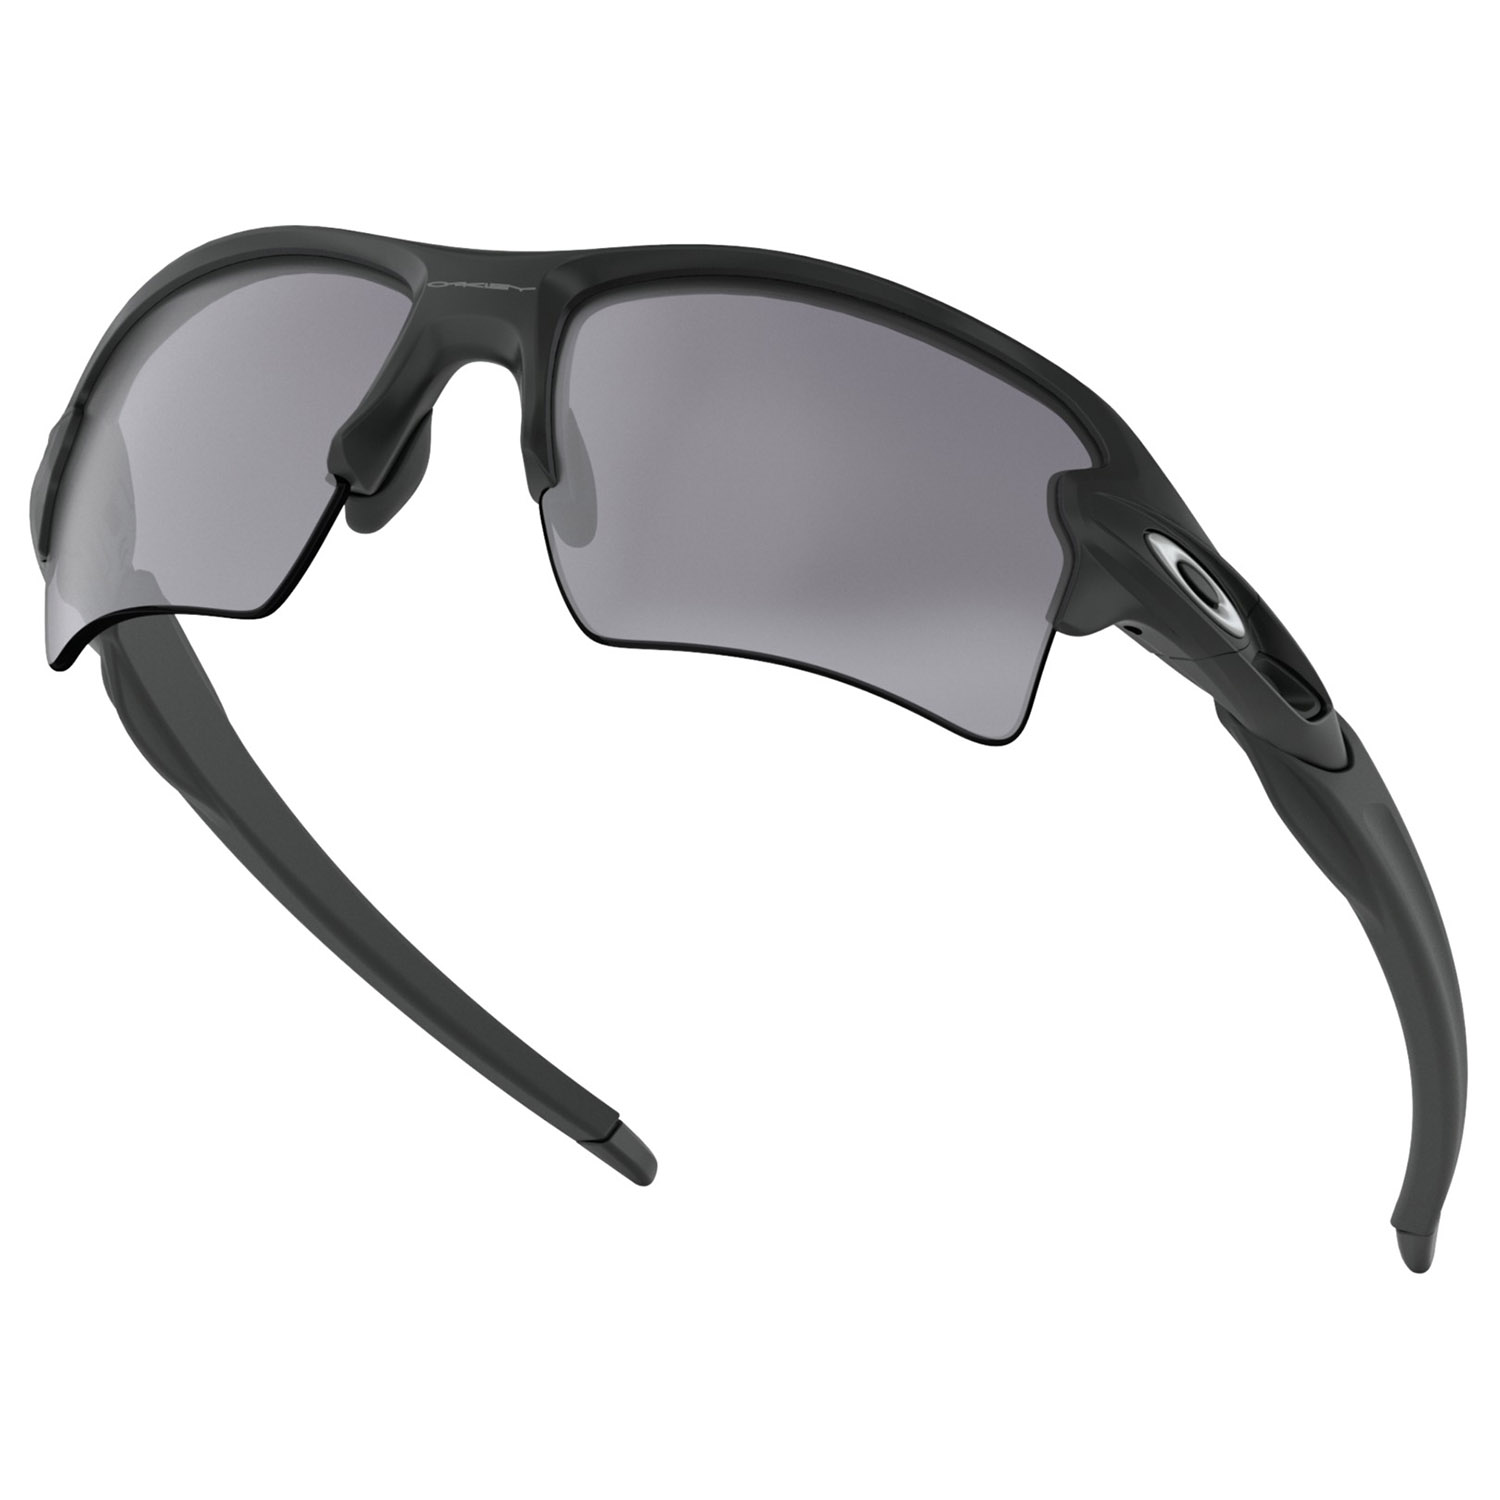 Oakley Flak 2.0 XL Sports Performance Non Polarized Sunglasses, Matte Black - image 2 of 6